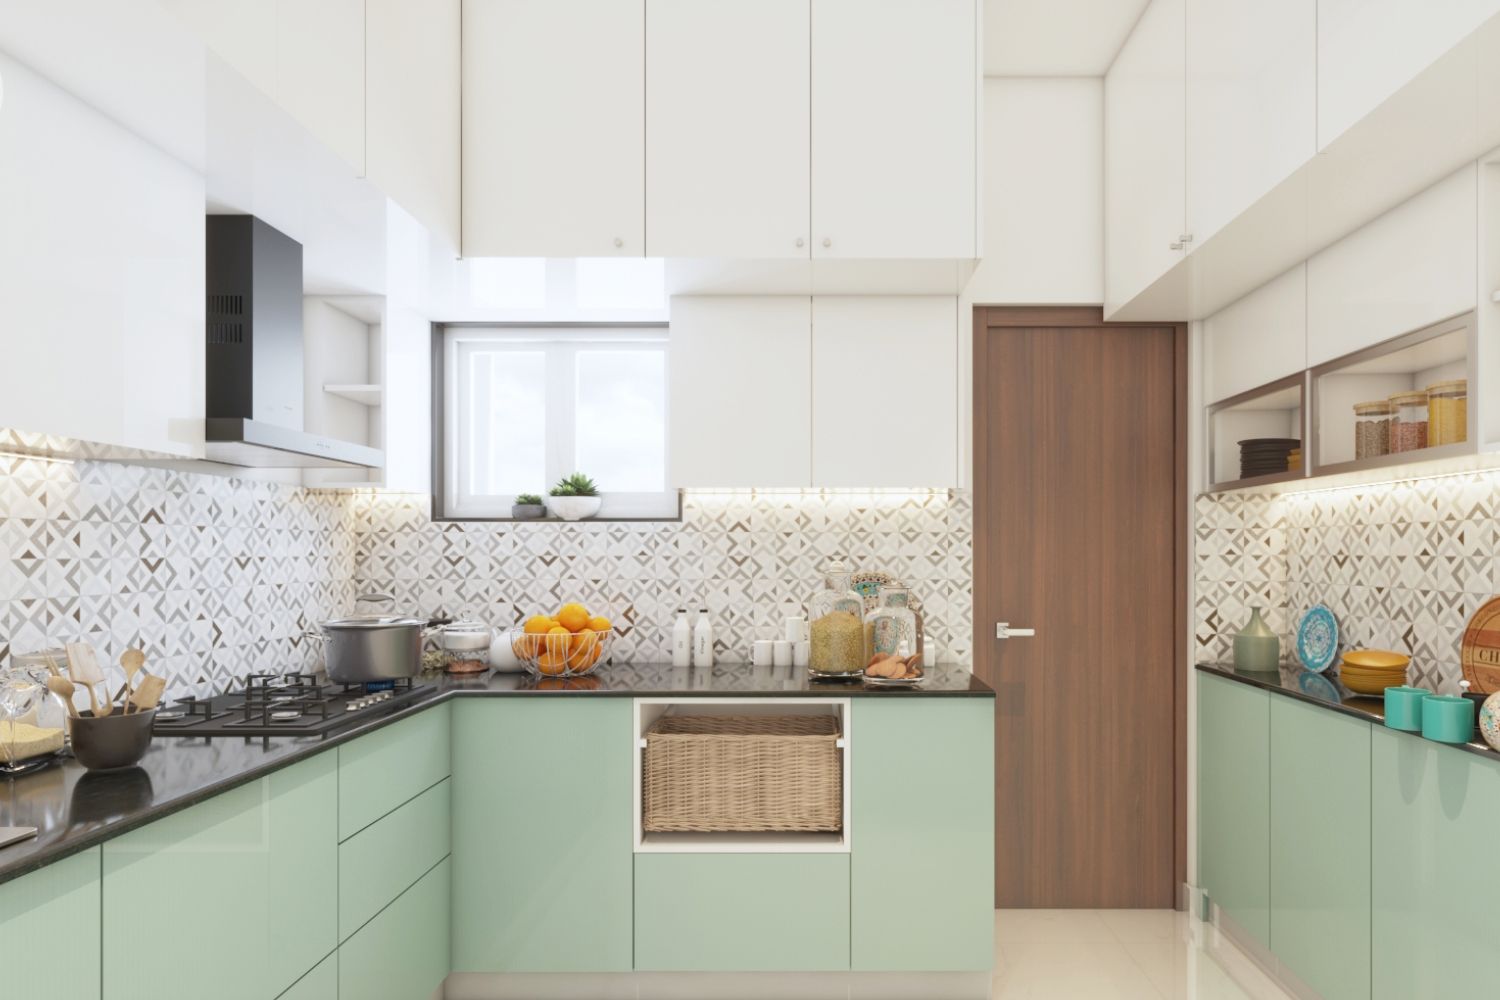 Modern Geometric Grey And White Kitchen Tile Design